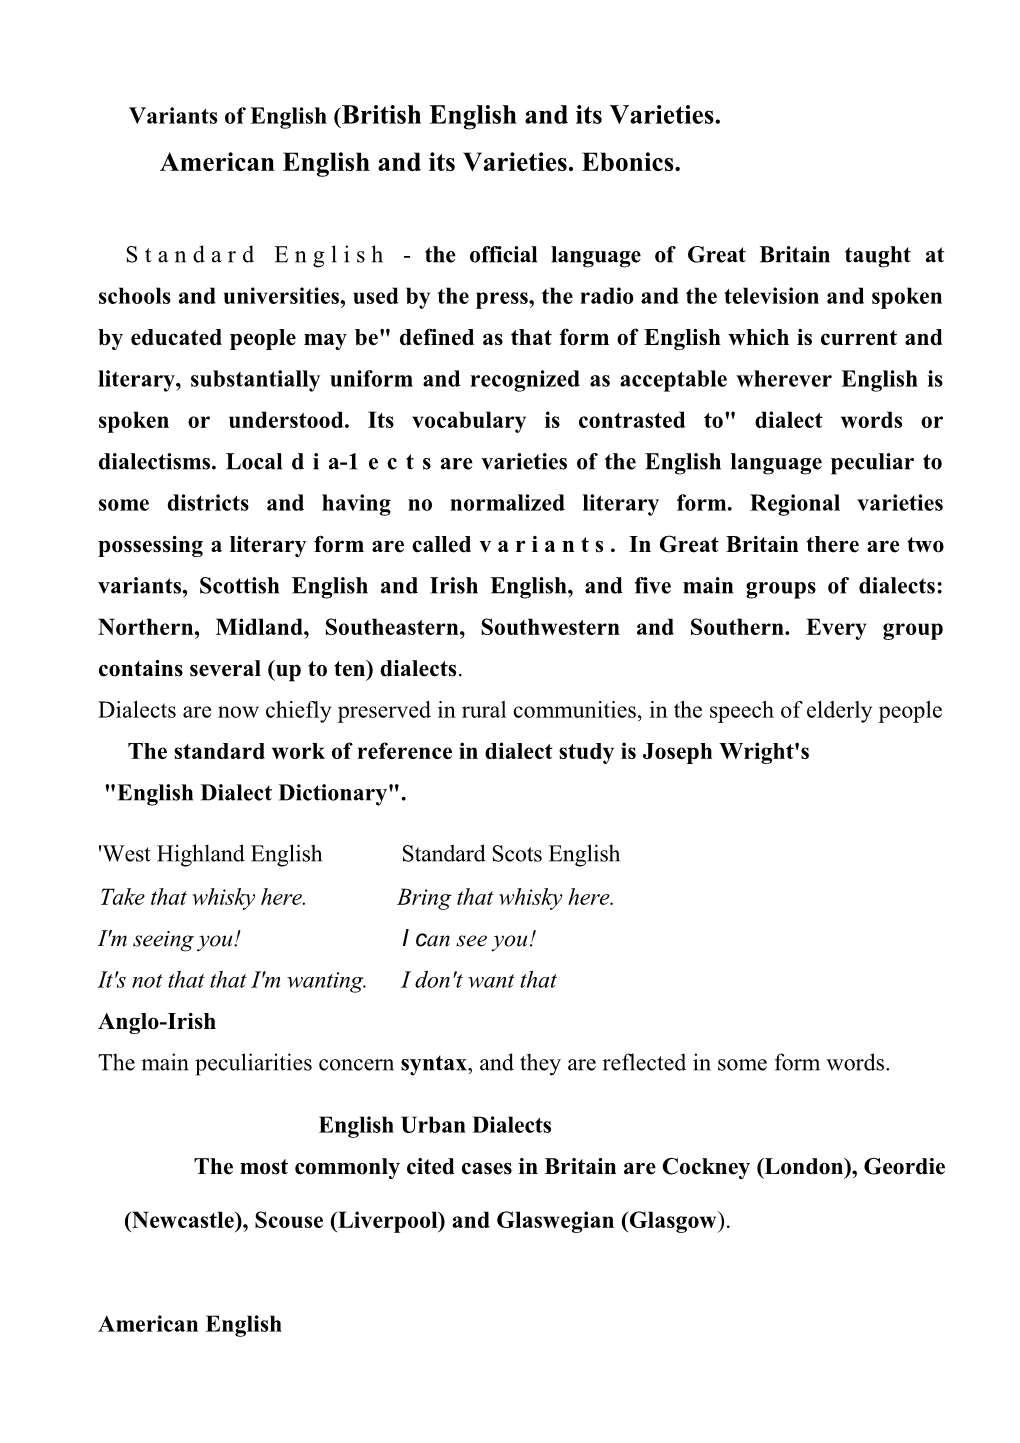 Variants of English (British English and Its Varieties